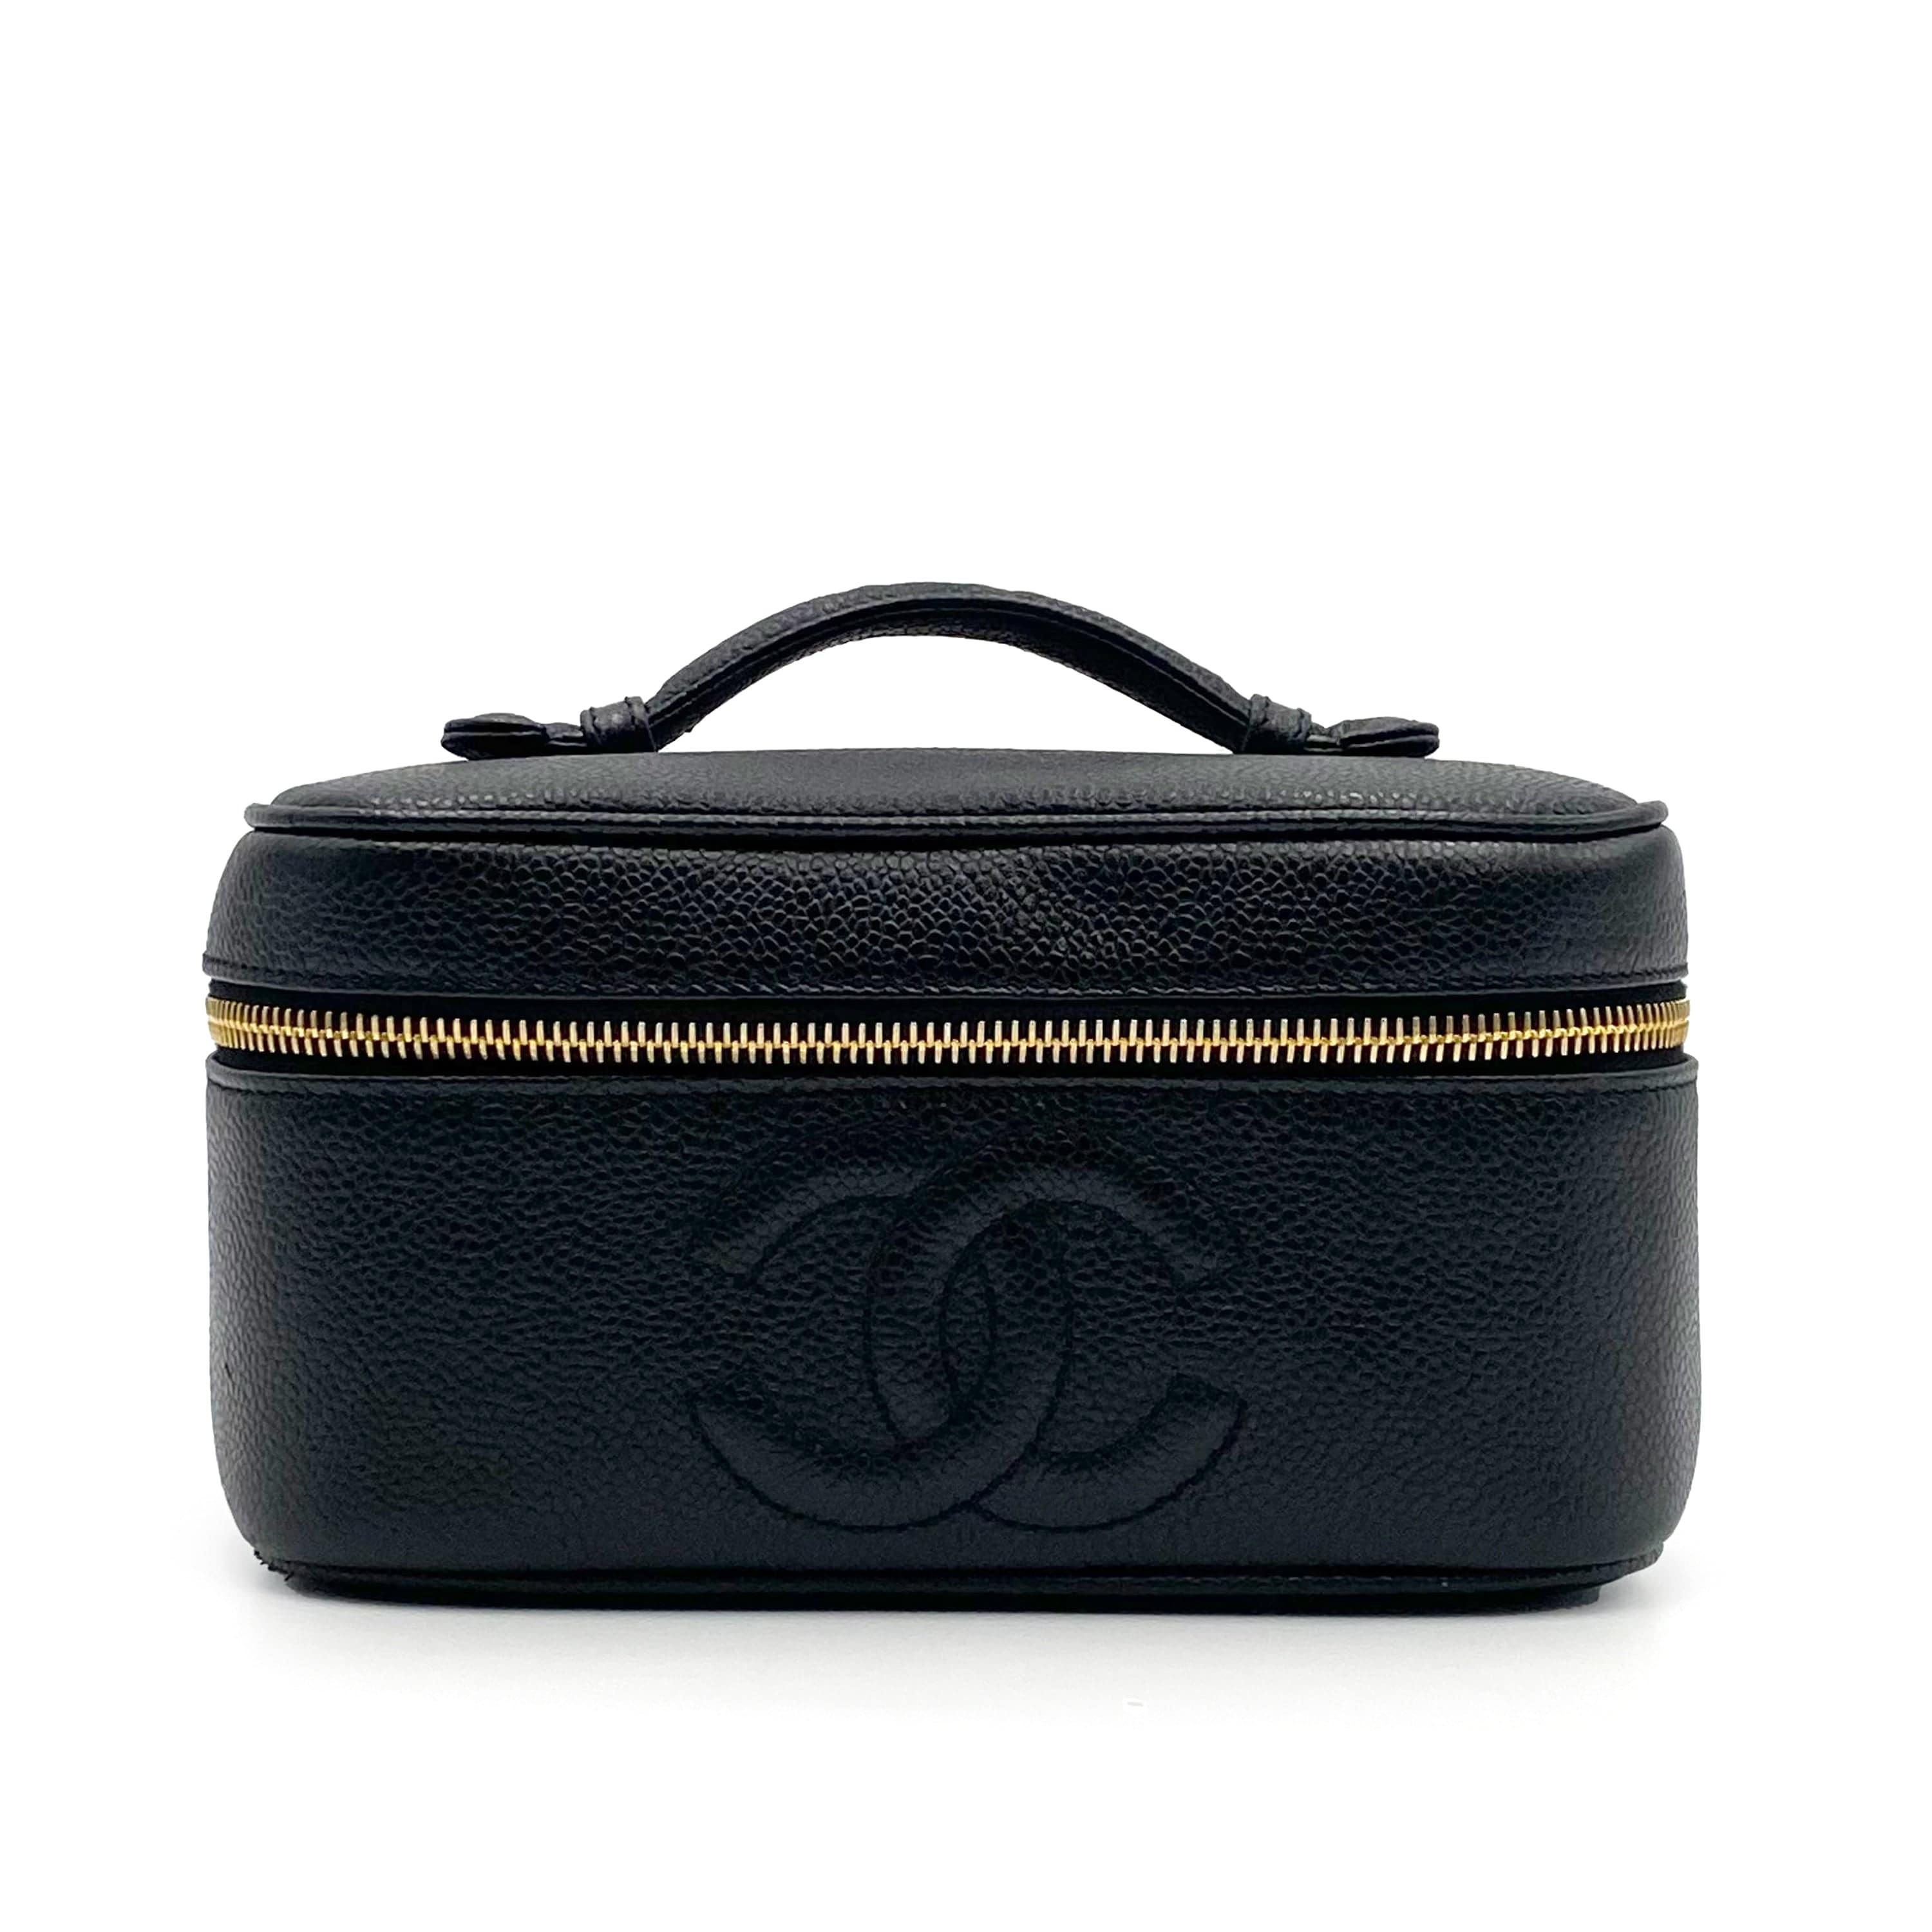 Chanel Chanel Vintage Vanity Black Caviar GHW #3 90233722